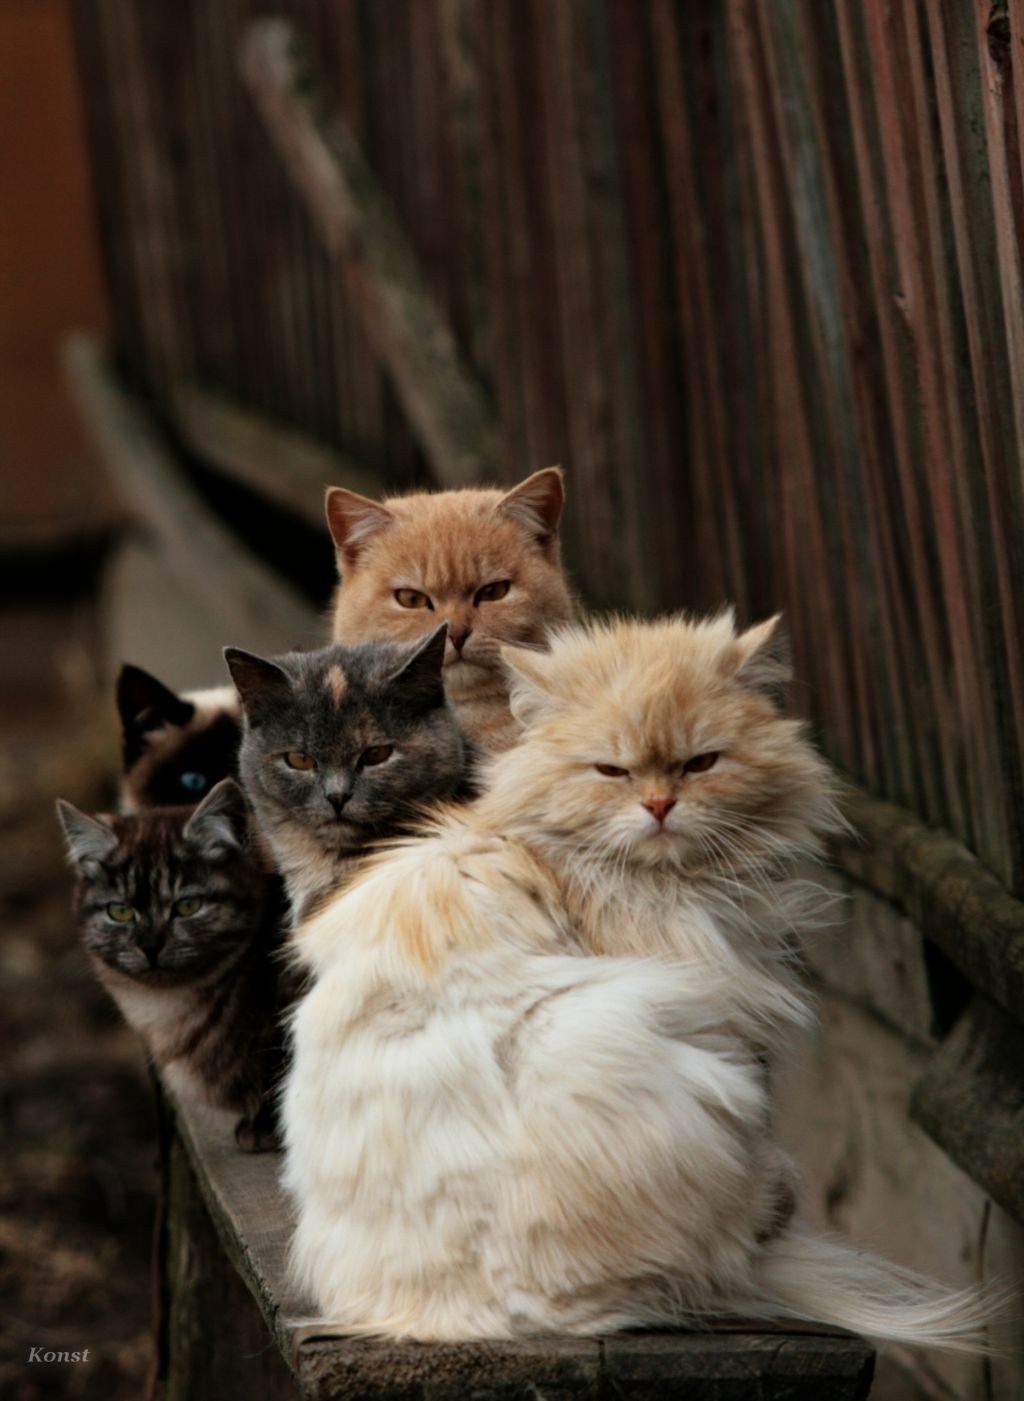 Четверо кошек. Рэгдолл и Мейн кун. Четыре котенка. Три кошки. Коты друзья.